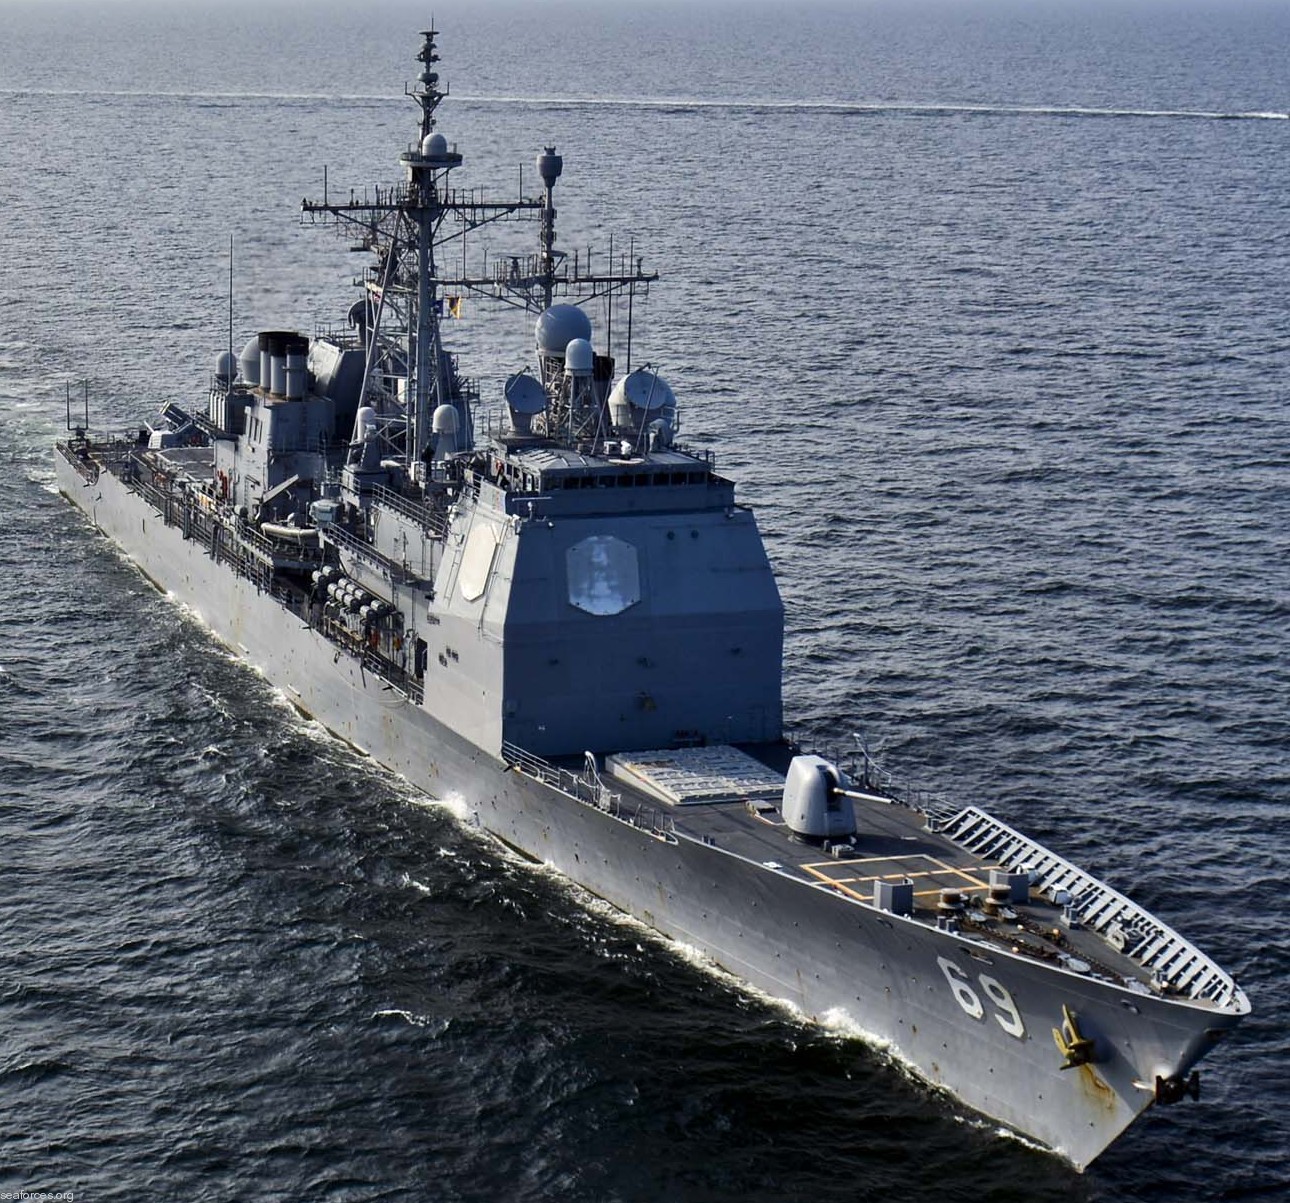 cg-69 uss vicksburg ticonderoga class guided missile cruiser us navy 04 baltic sea